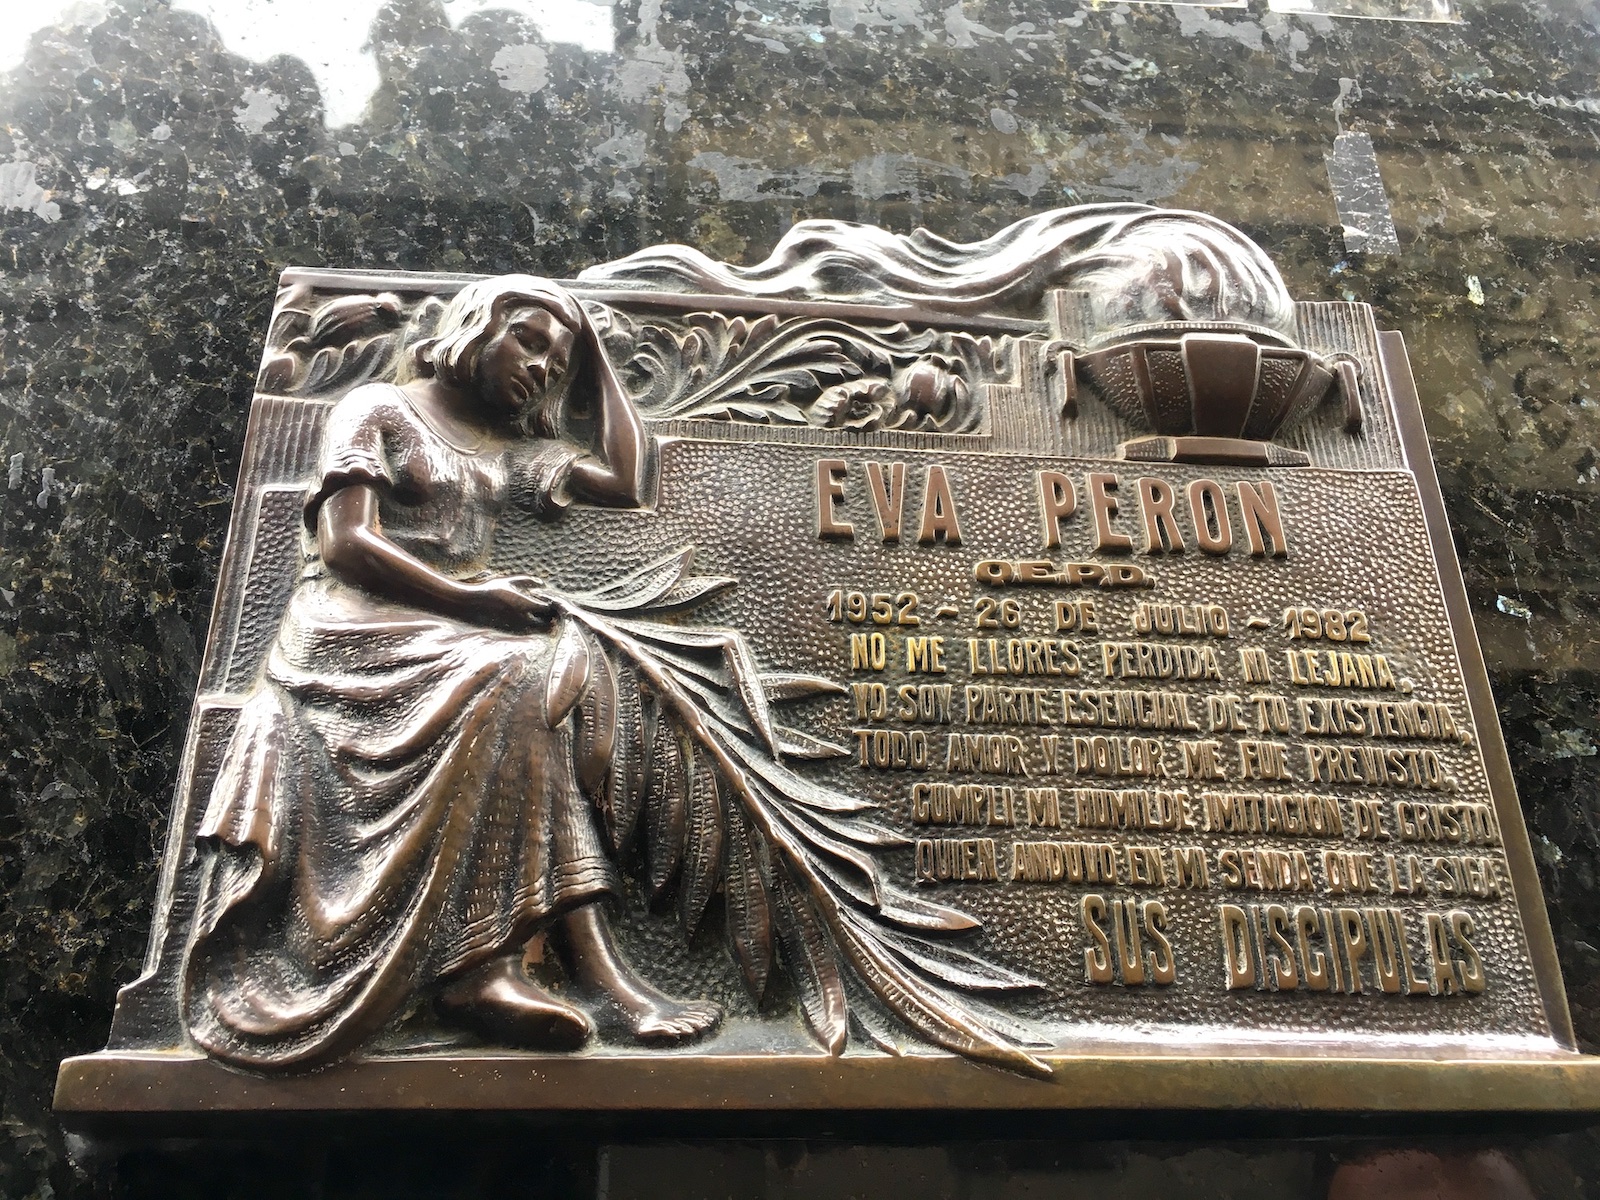 The grave of Eva Peron, Recoleta Cemetery